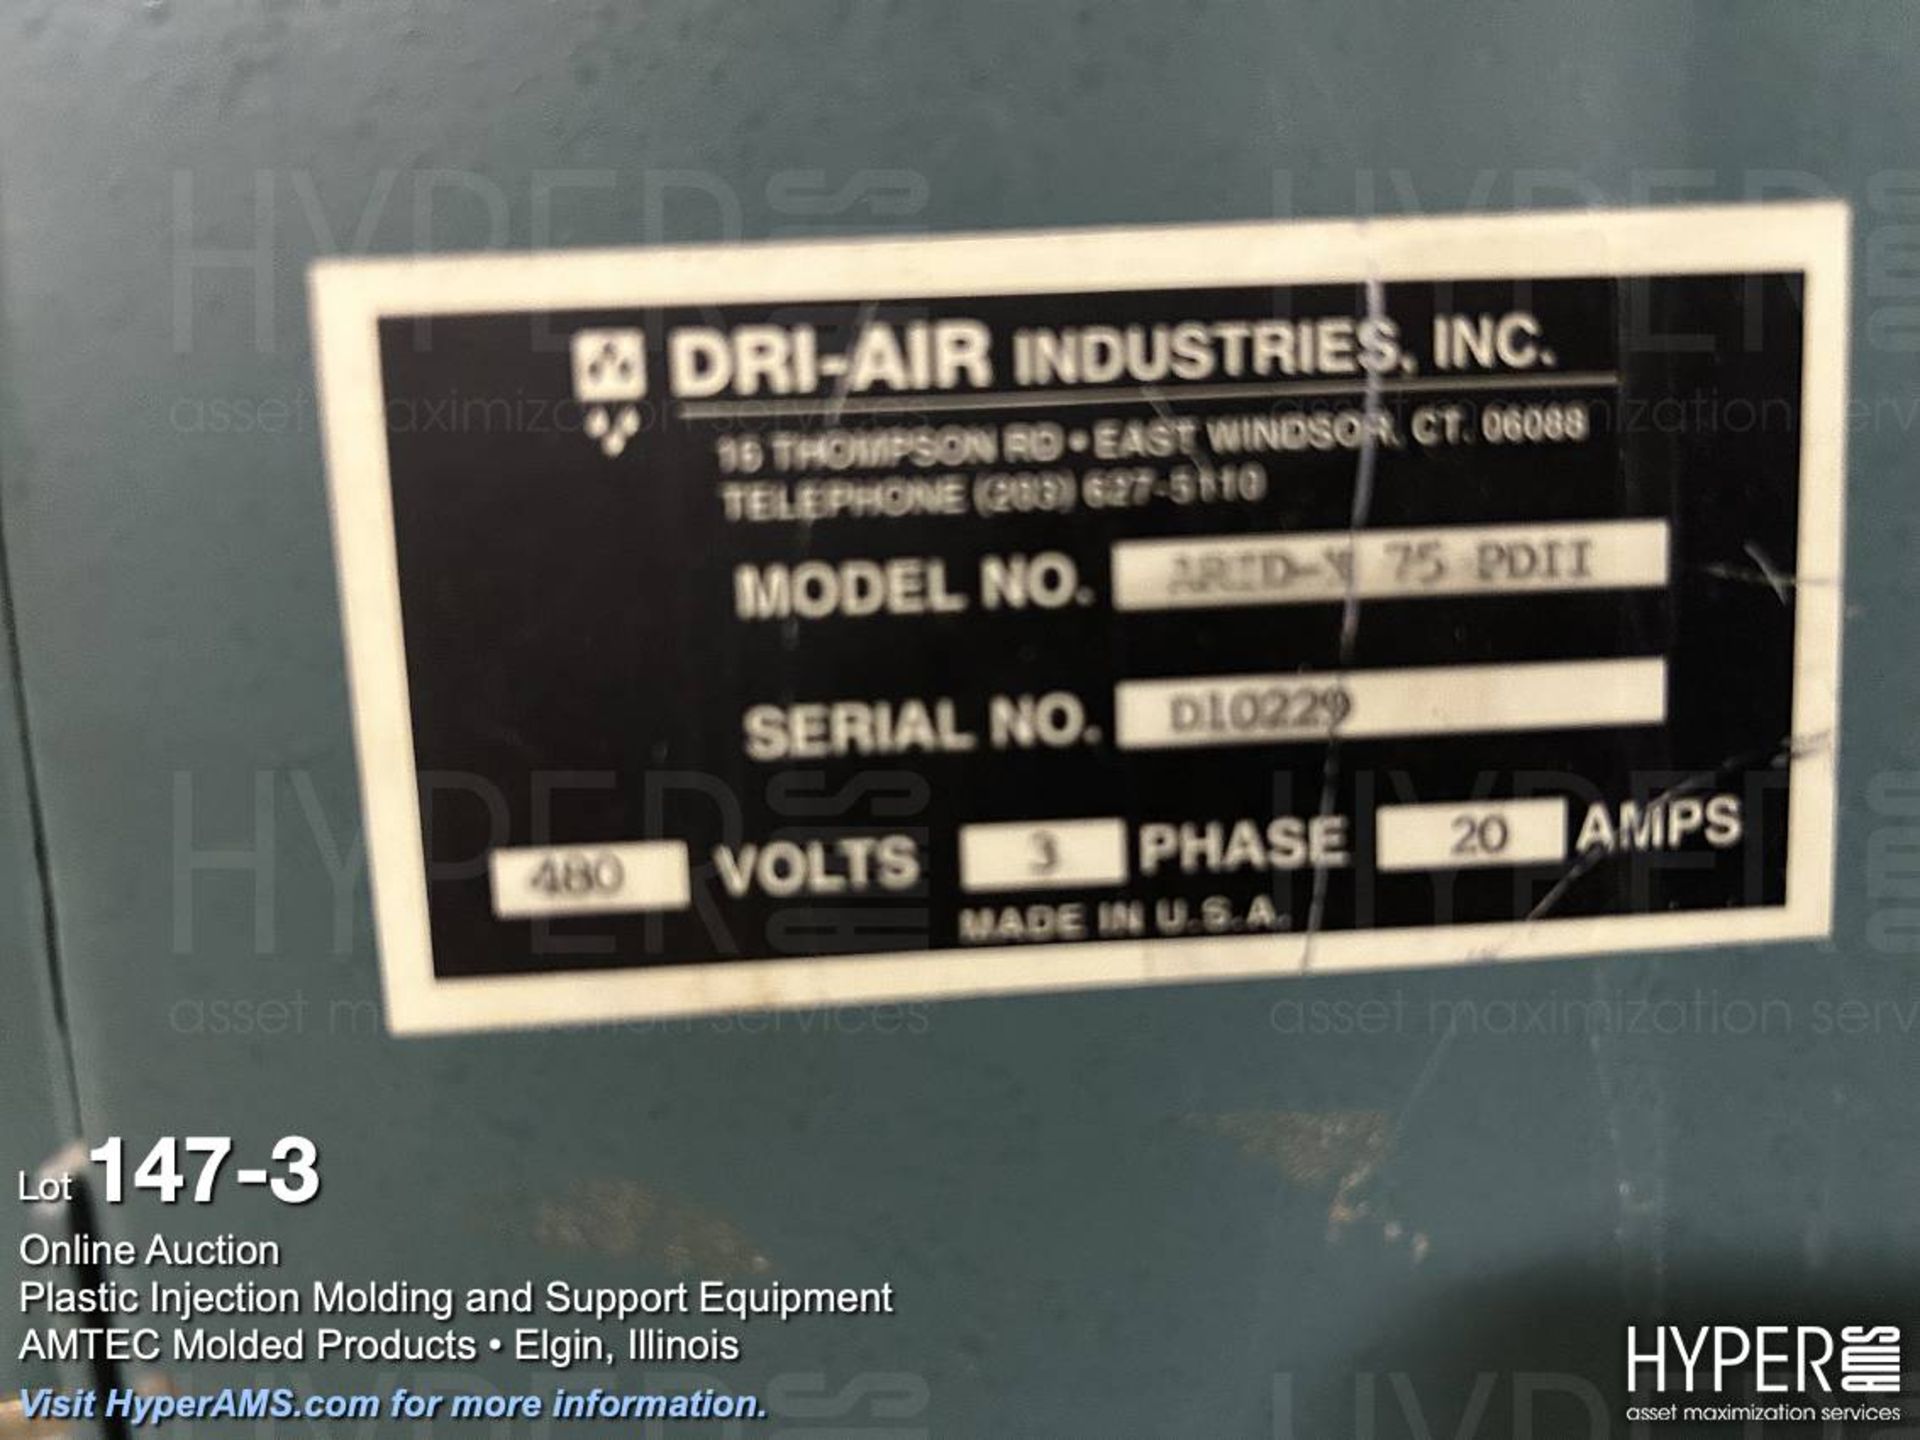 Dri-Air ARID-X 75 PDII dryer - Image 3 of 6